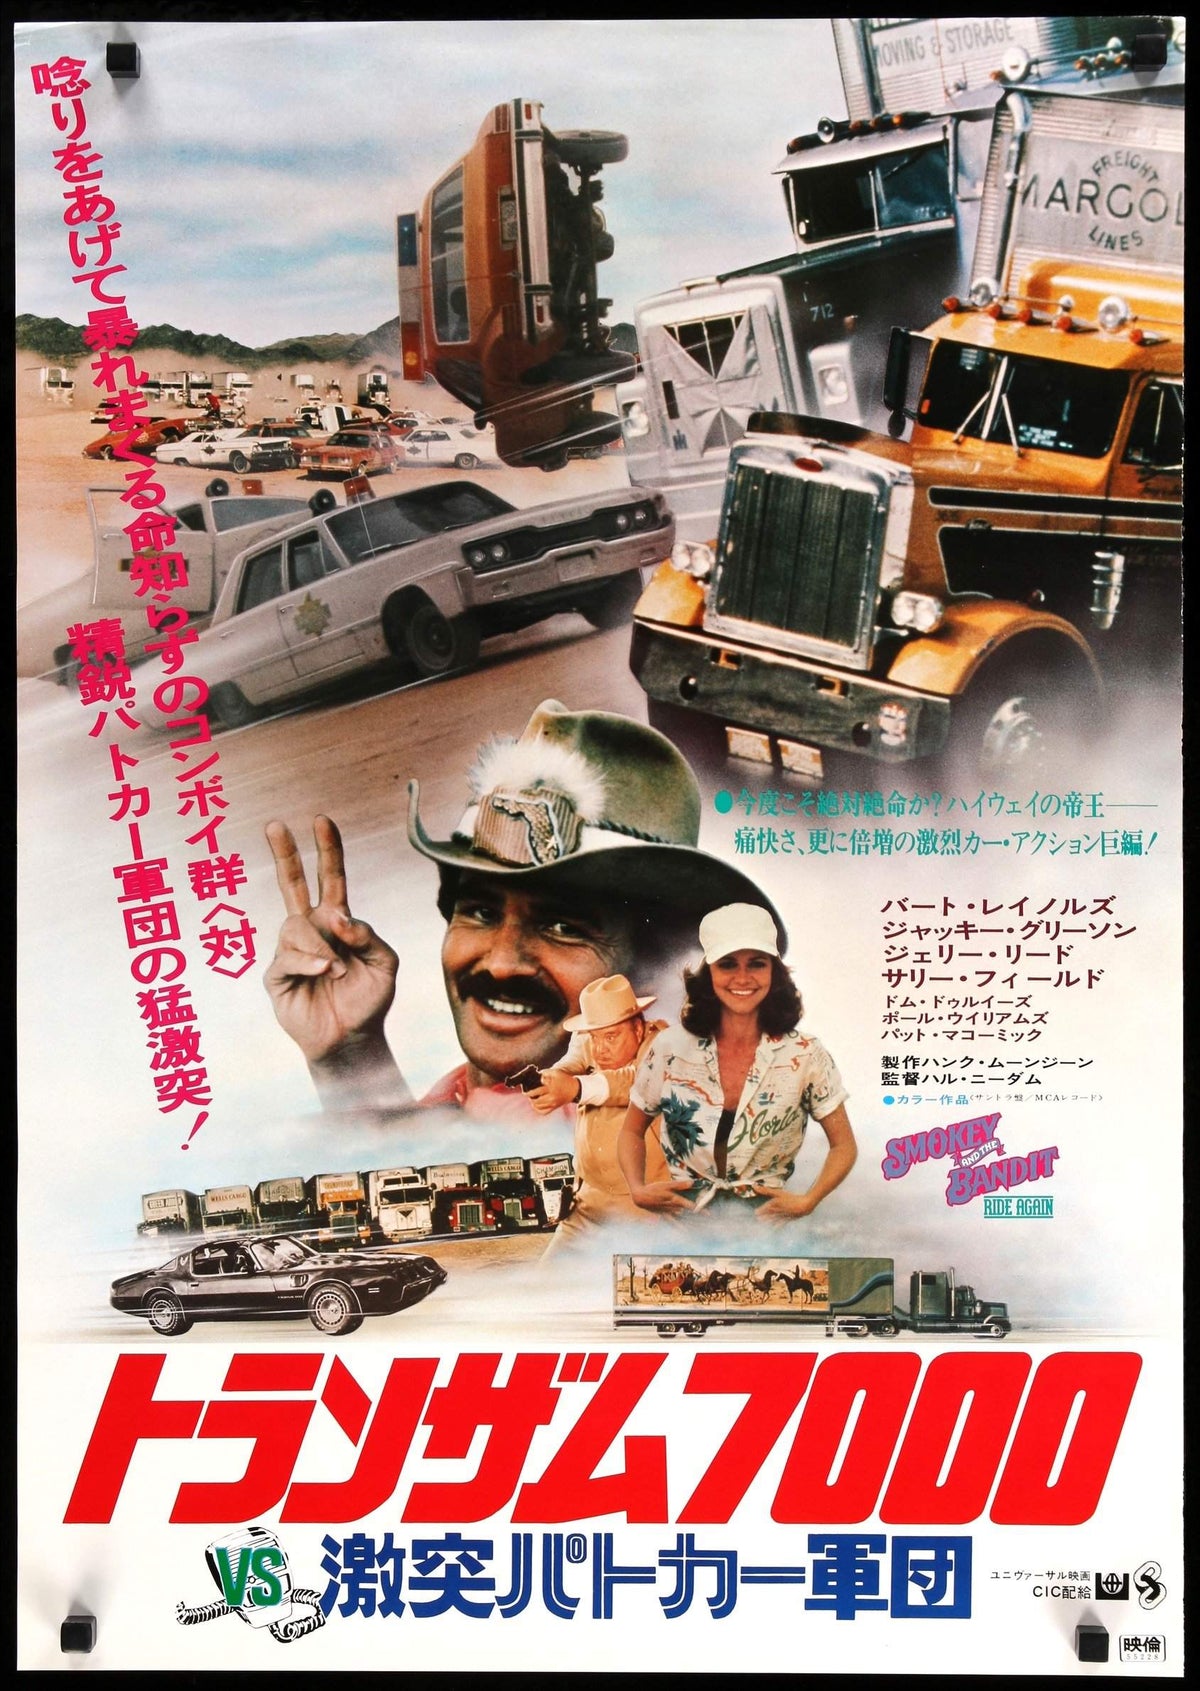 Smokey and the Bandit 2 (1980) original movie poster for sale at Original Film Art